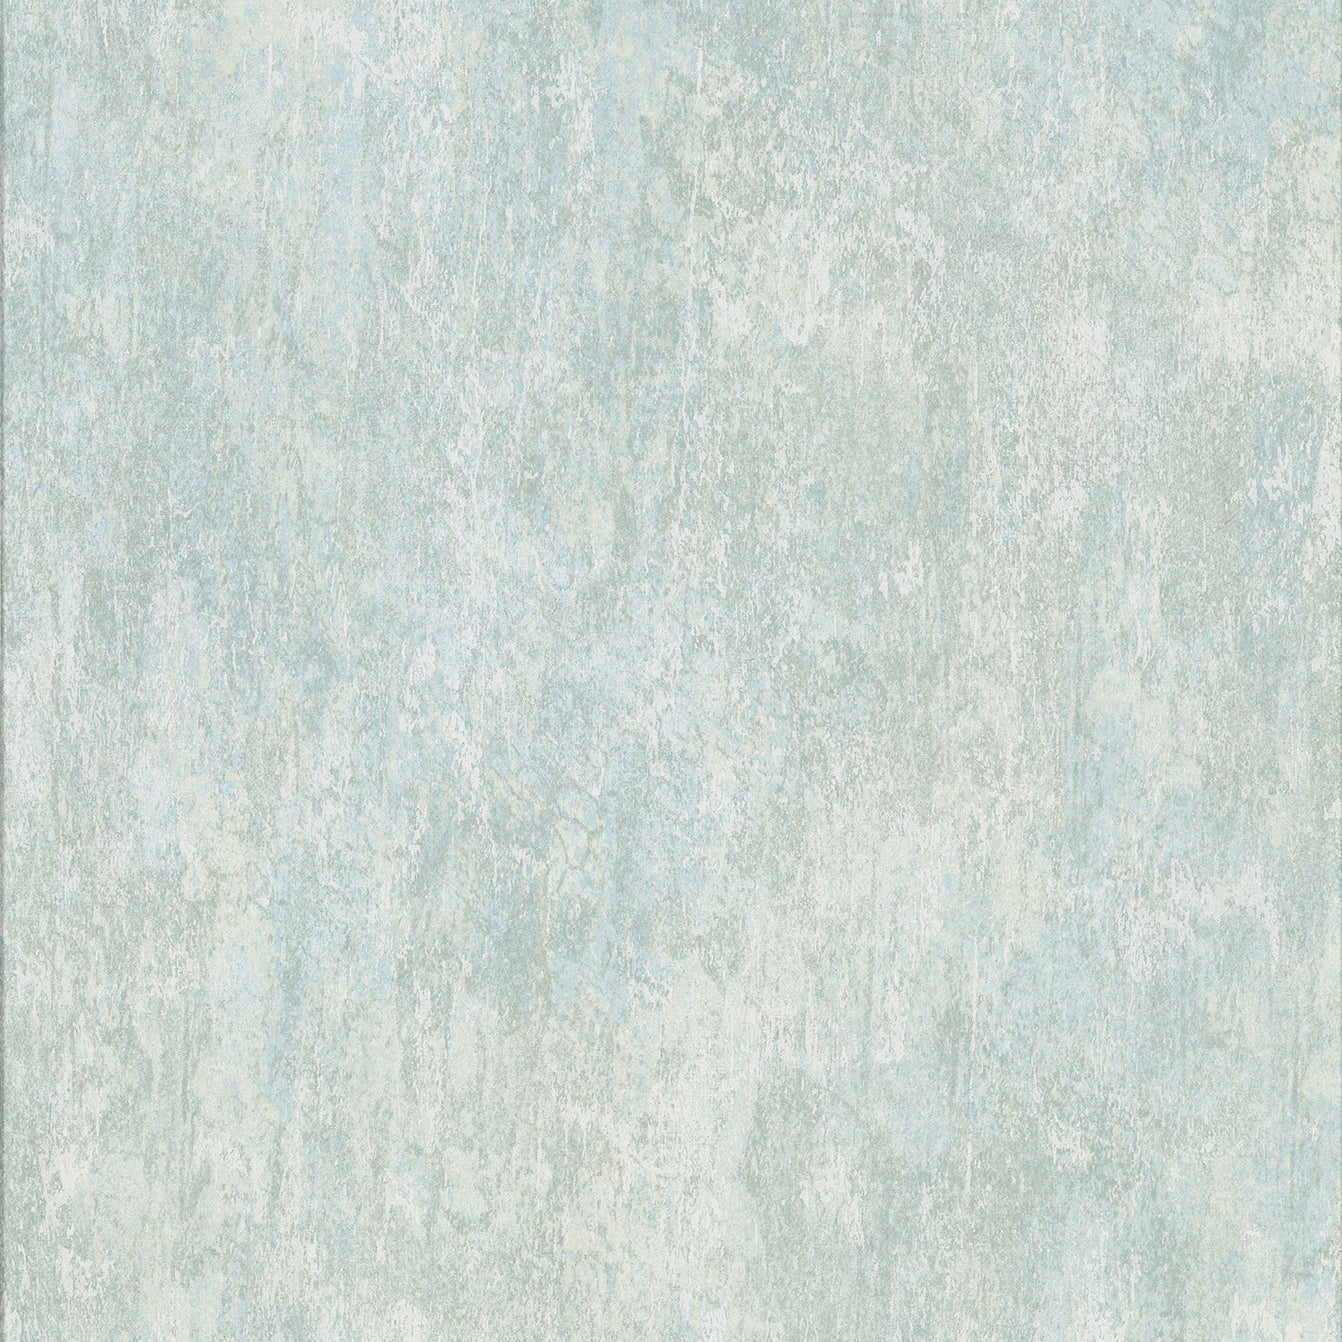 Purchase 2959-AWSH-12058 Textural Essentials Micah Seafoam Distressed Texture Seafoam Brewster Wallpaper